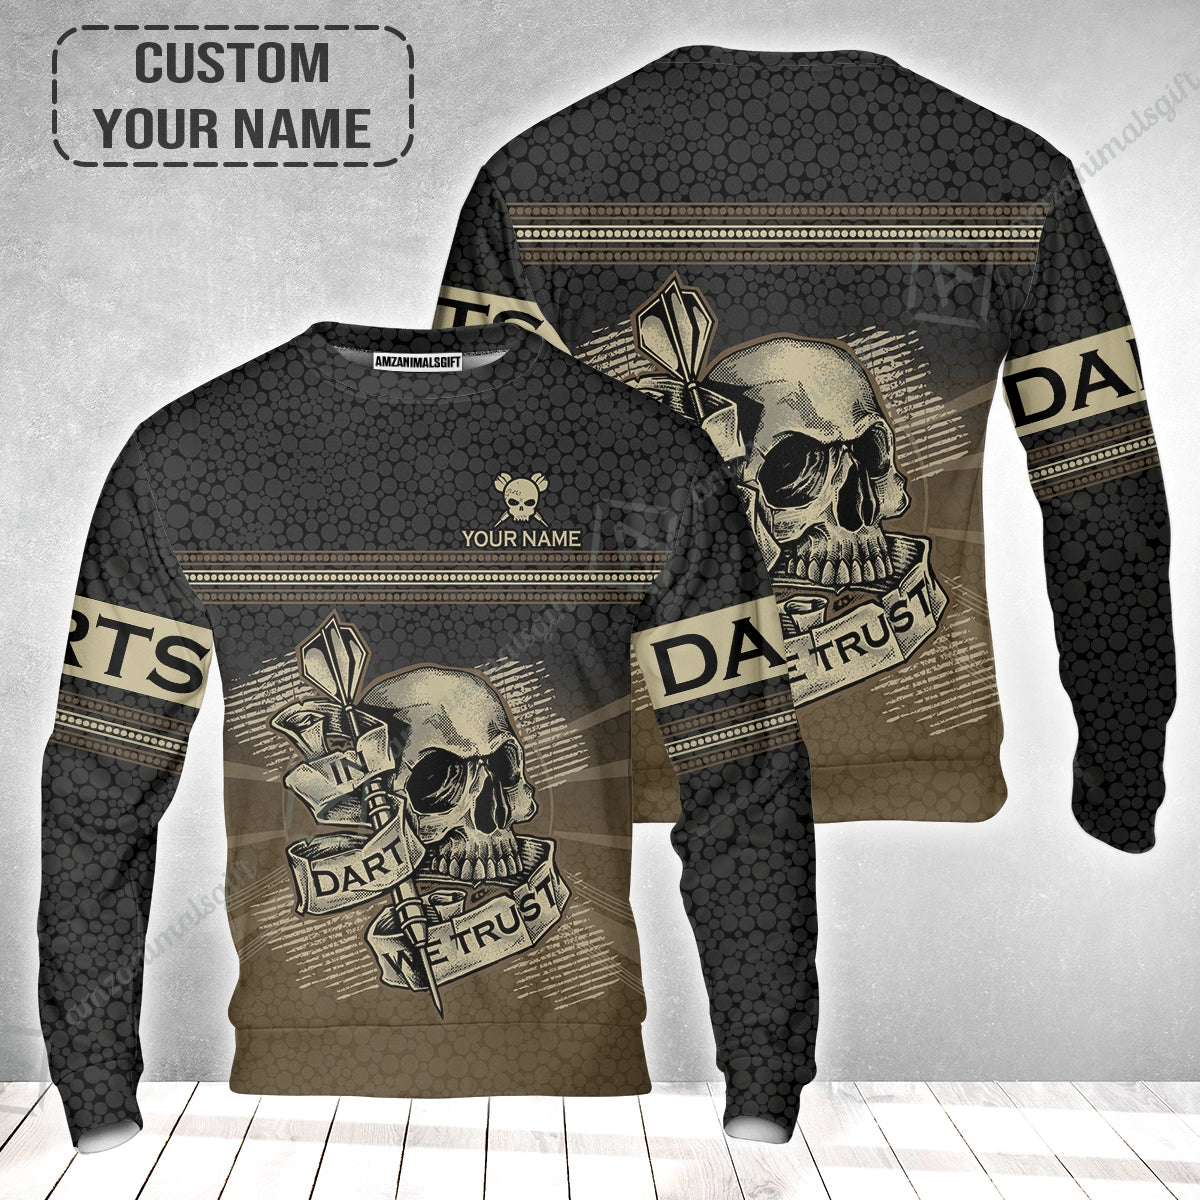 Customized Darts Sweatshirt, Darts Skull In Dart We Trust Sweatshirt For Men And Women, Perfect Outfit For Darts Lovers, Darts Players